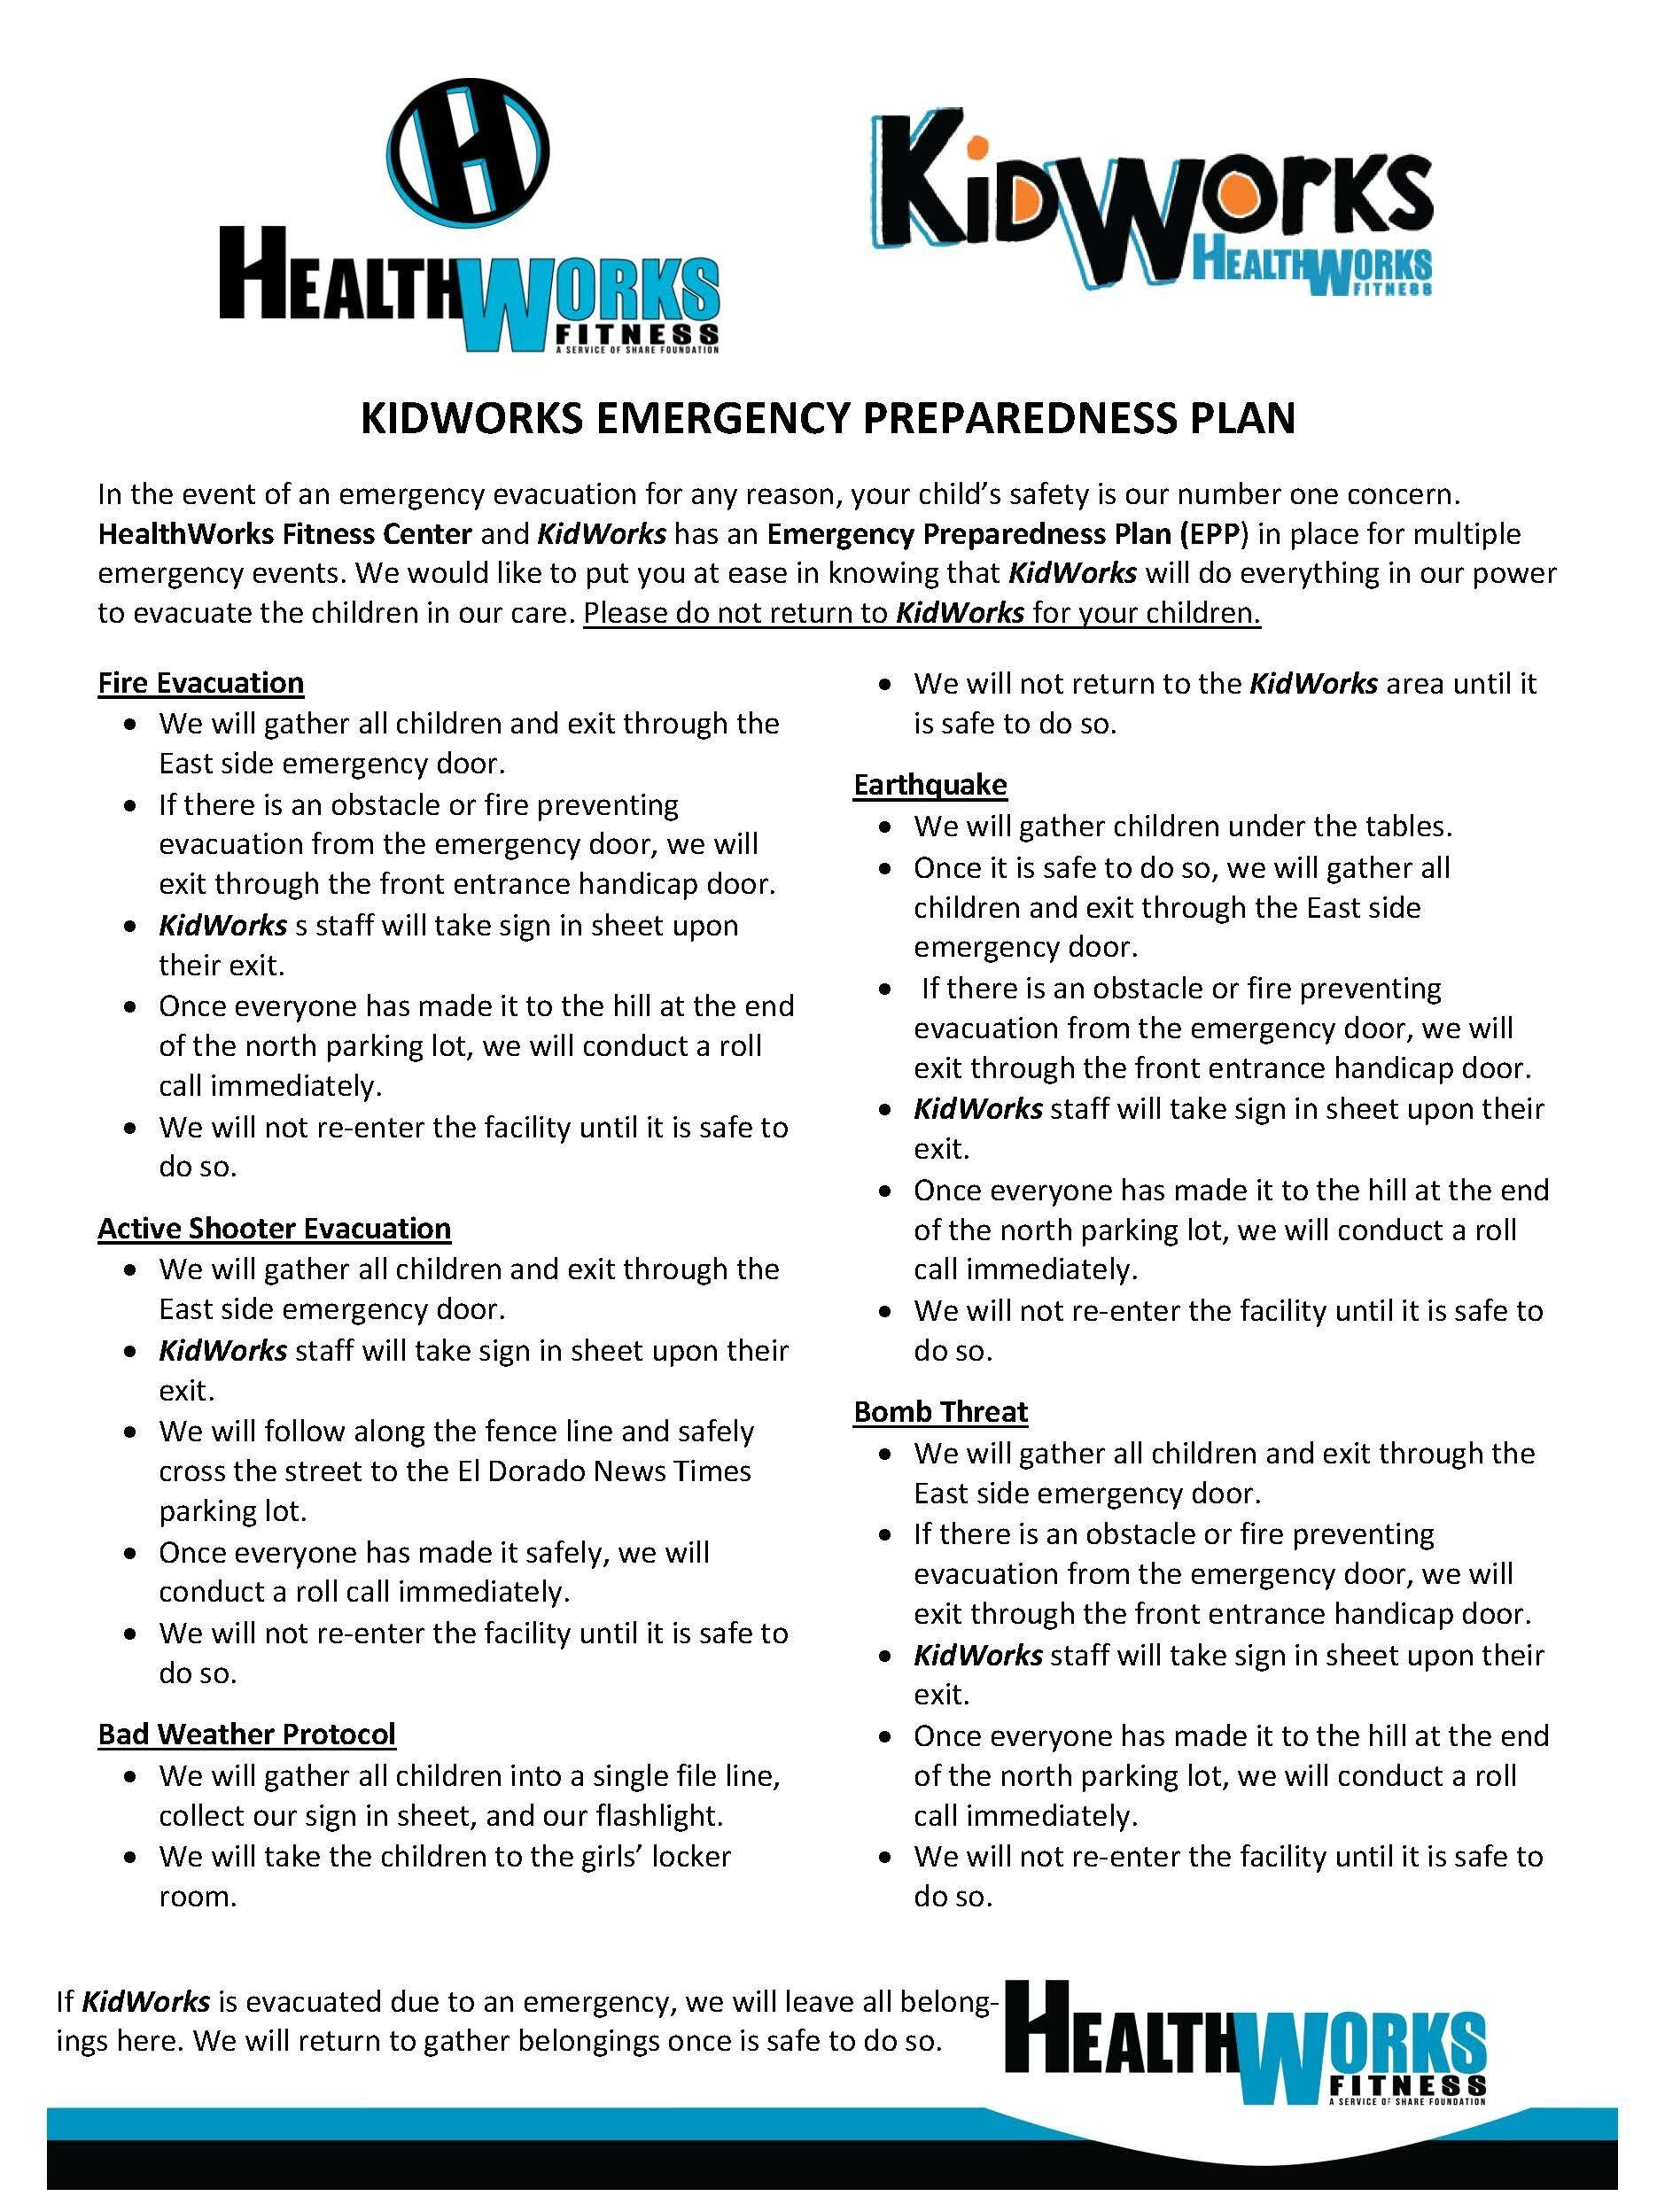 KidWorks Emergency Preparedness Plan